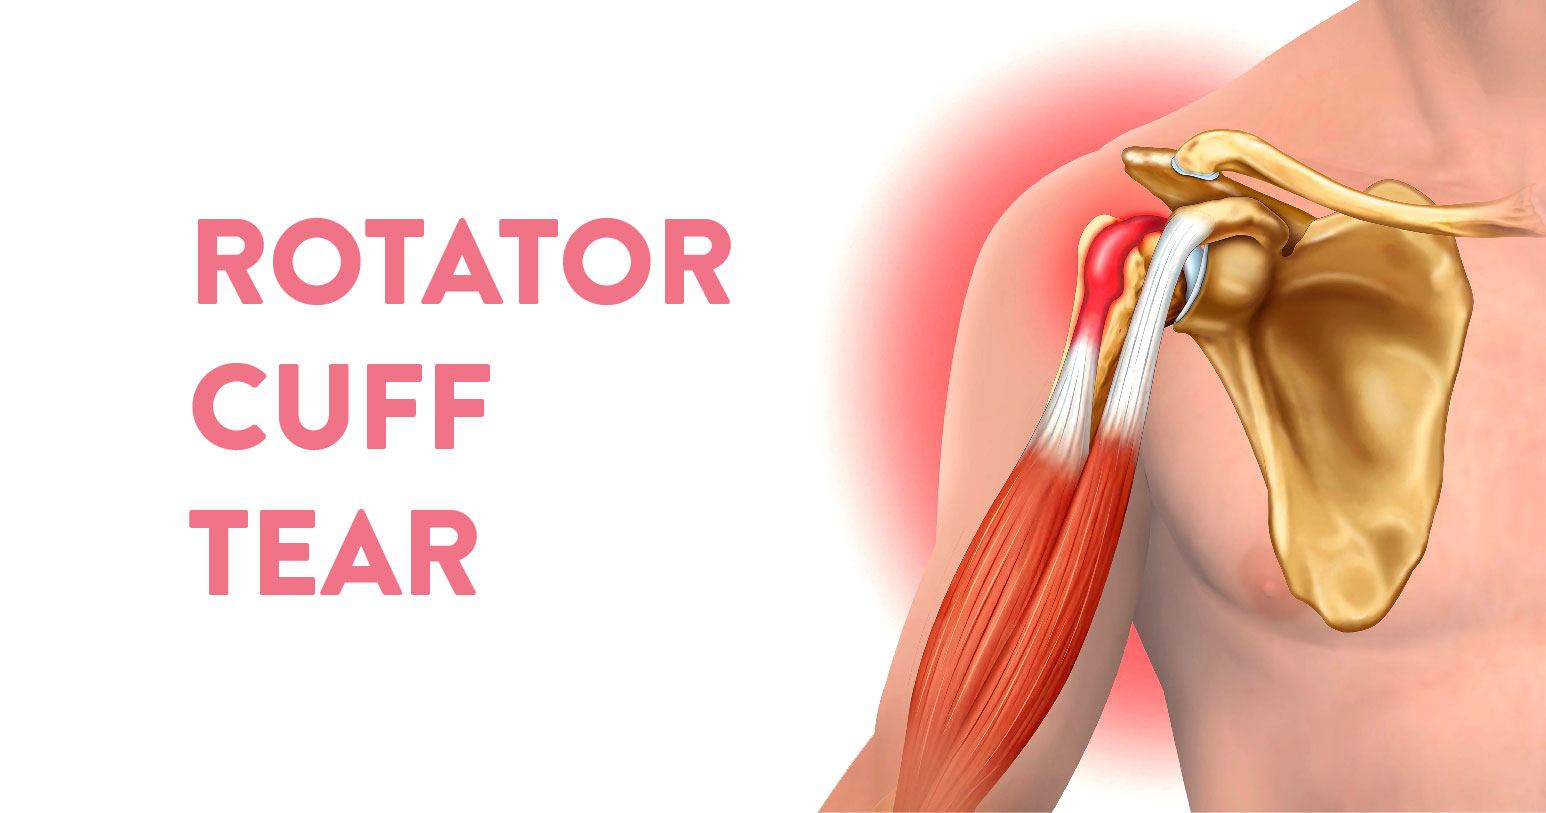 What is a rotator cuff tear?